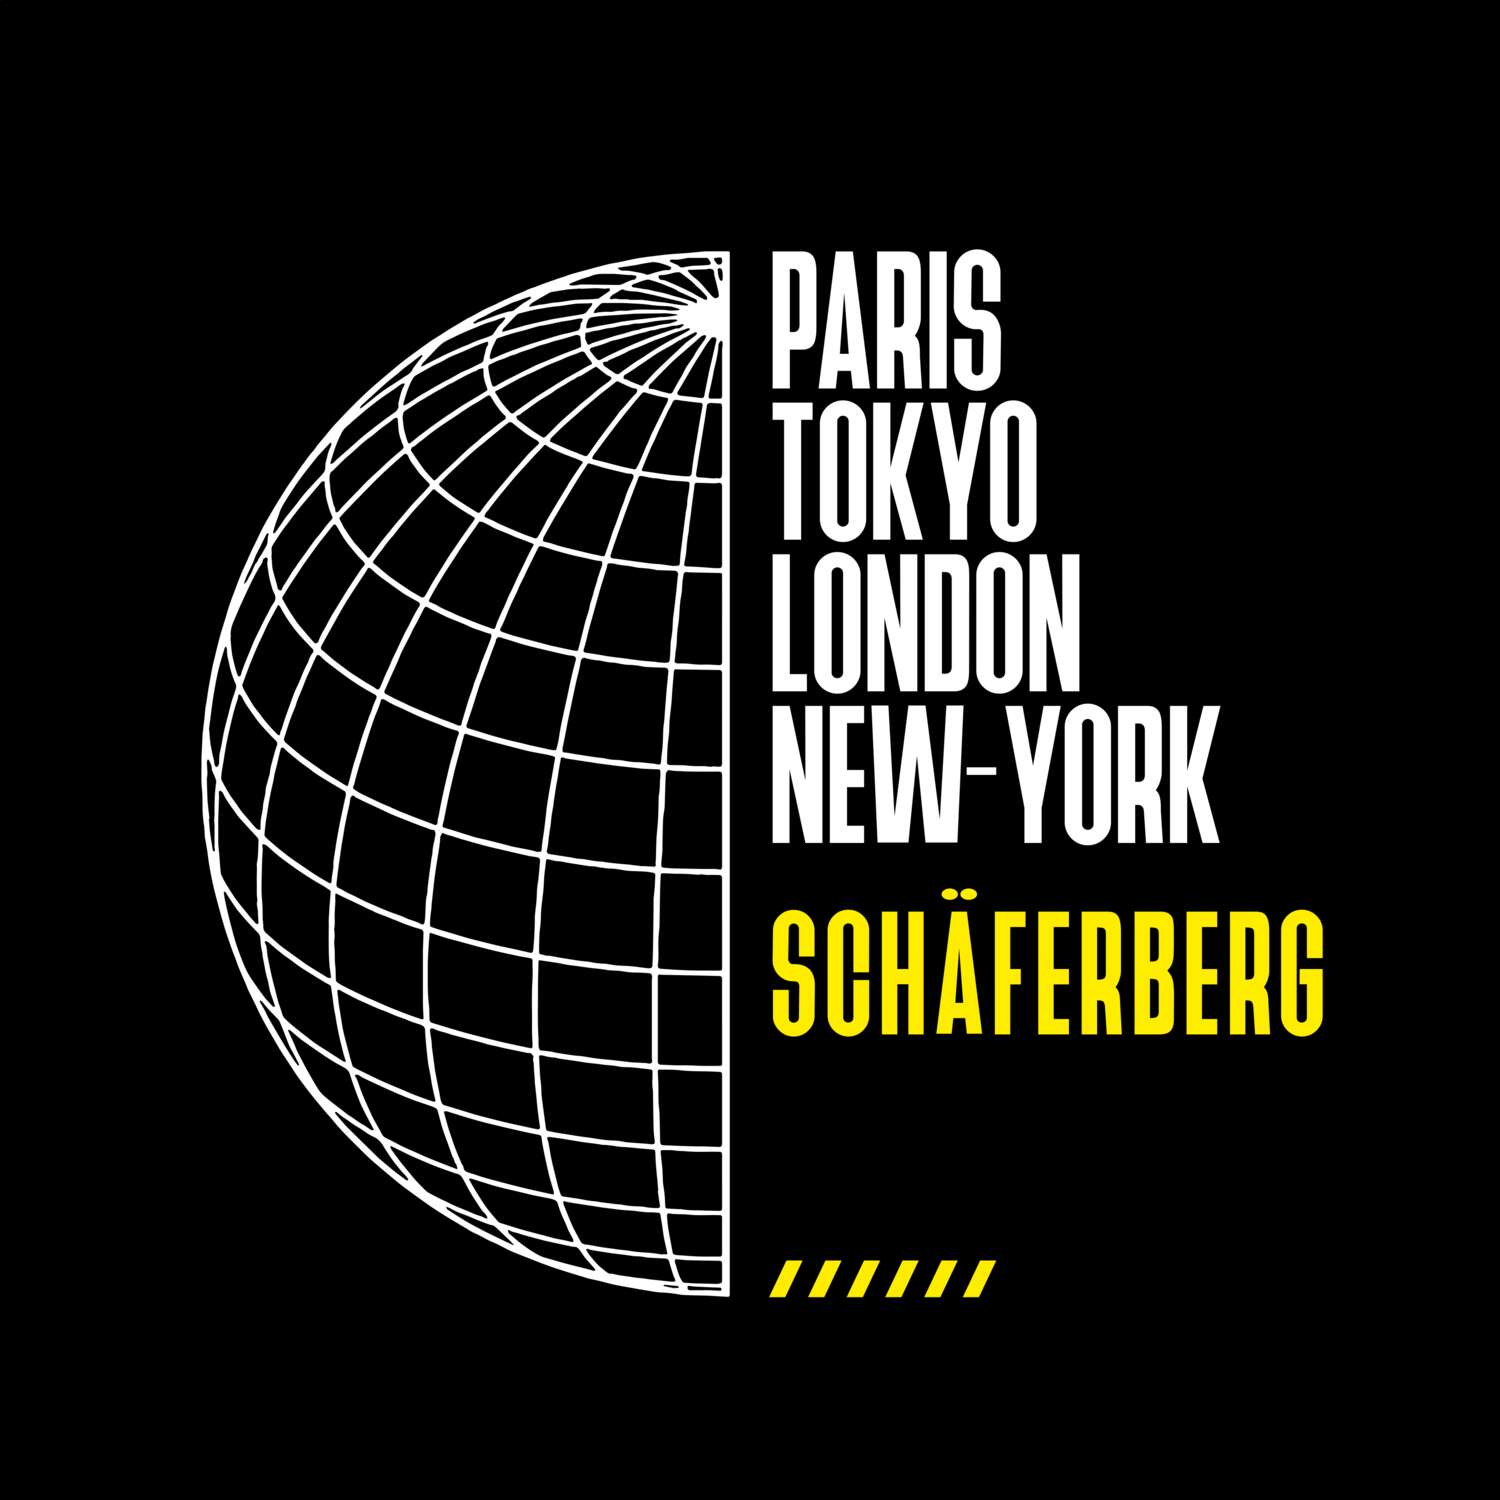 Schäferberg T-Shirt »Paris Tokyo London«